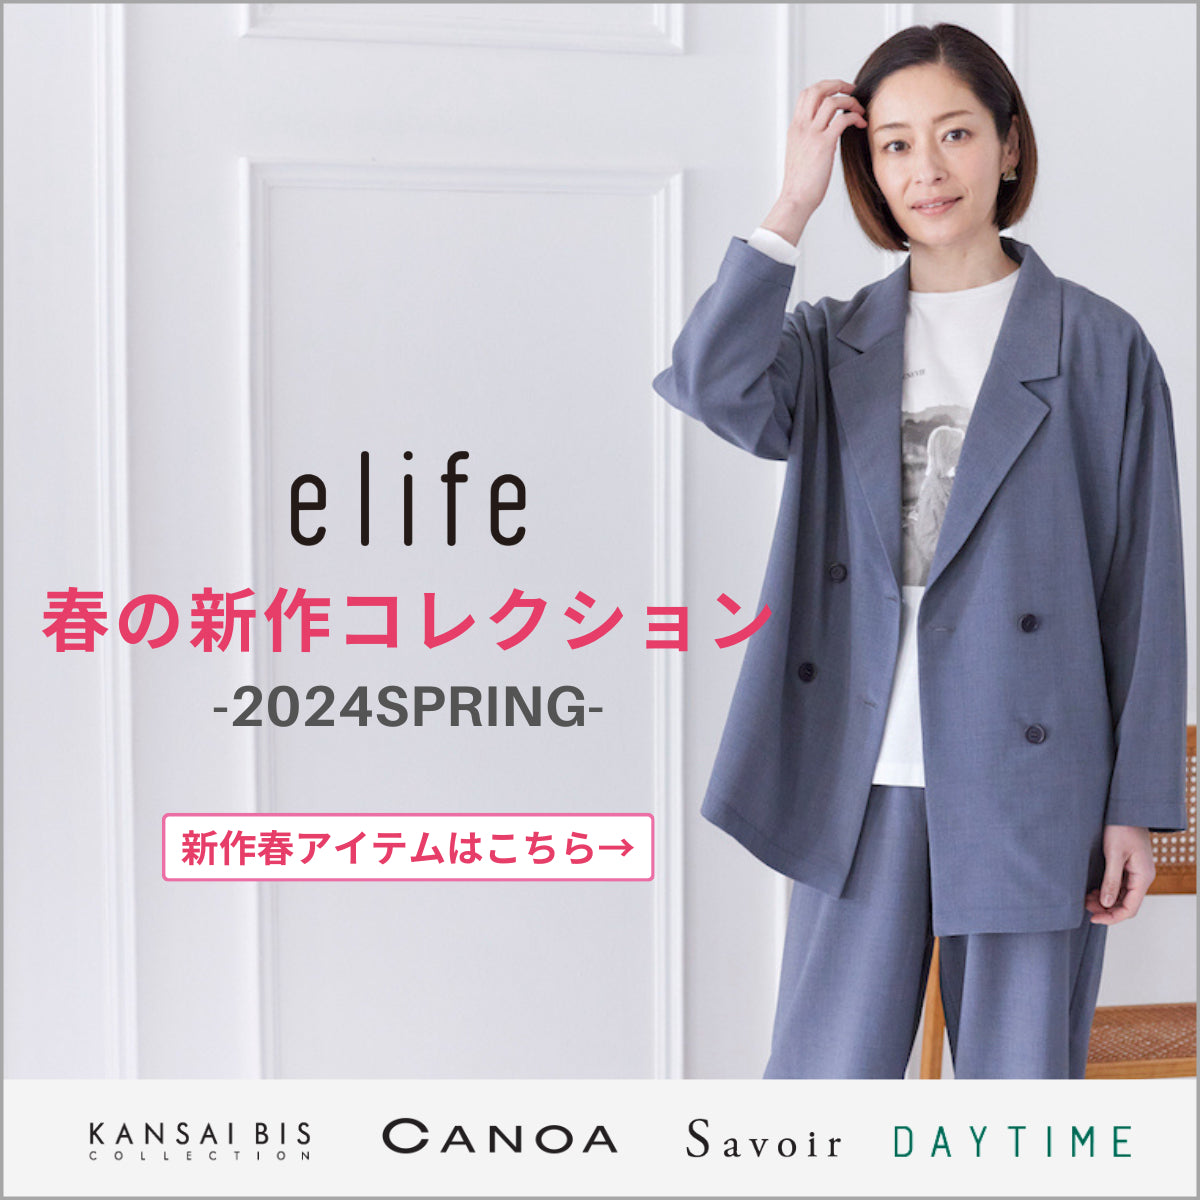 elife 春の新作特集 ブランド公式通販 elife store（イーライフストア）